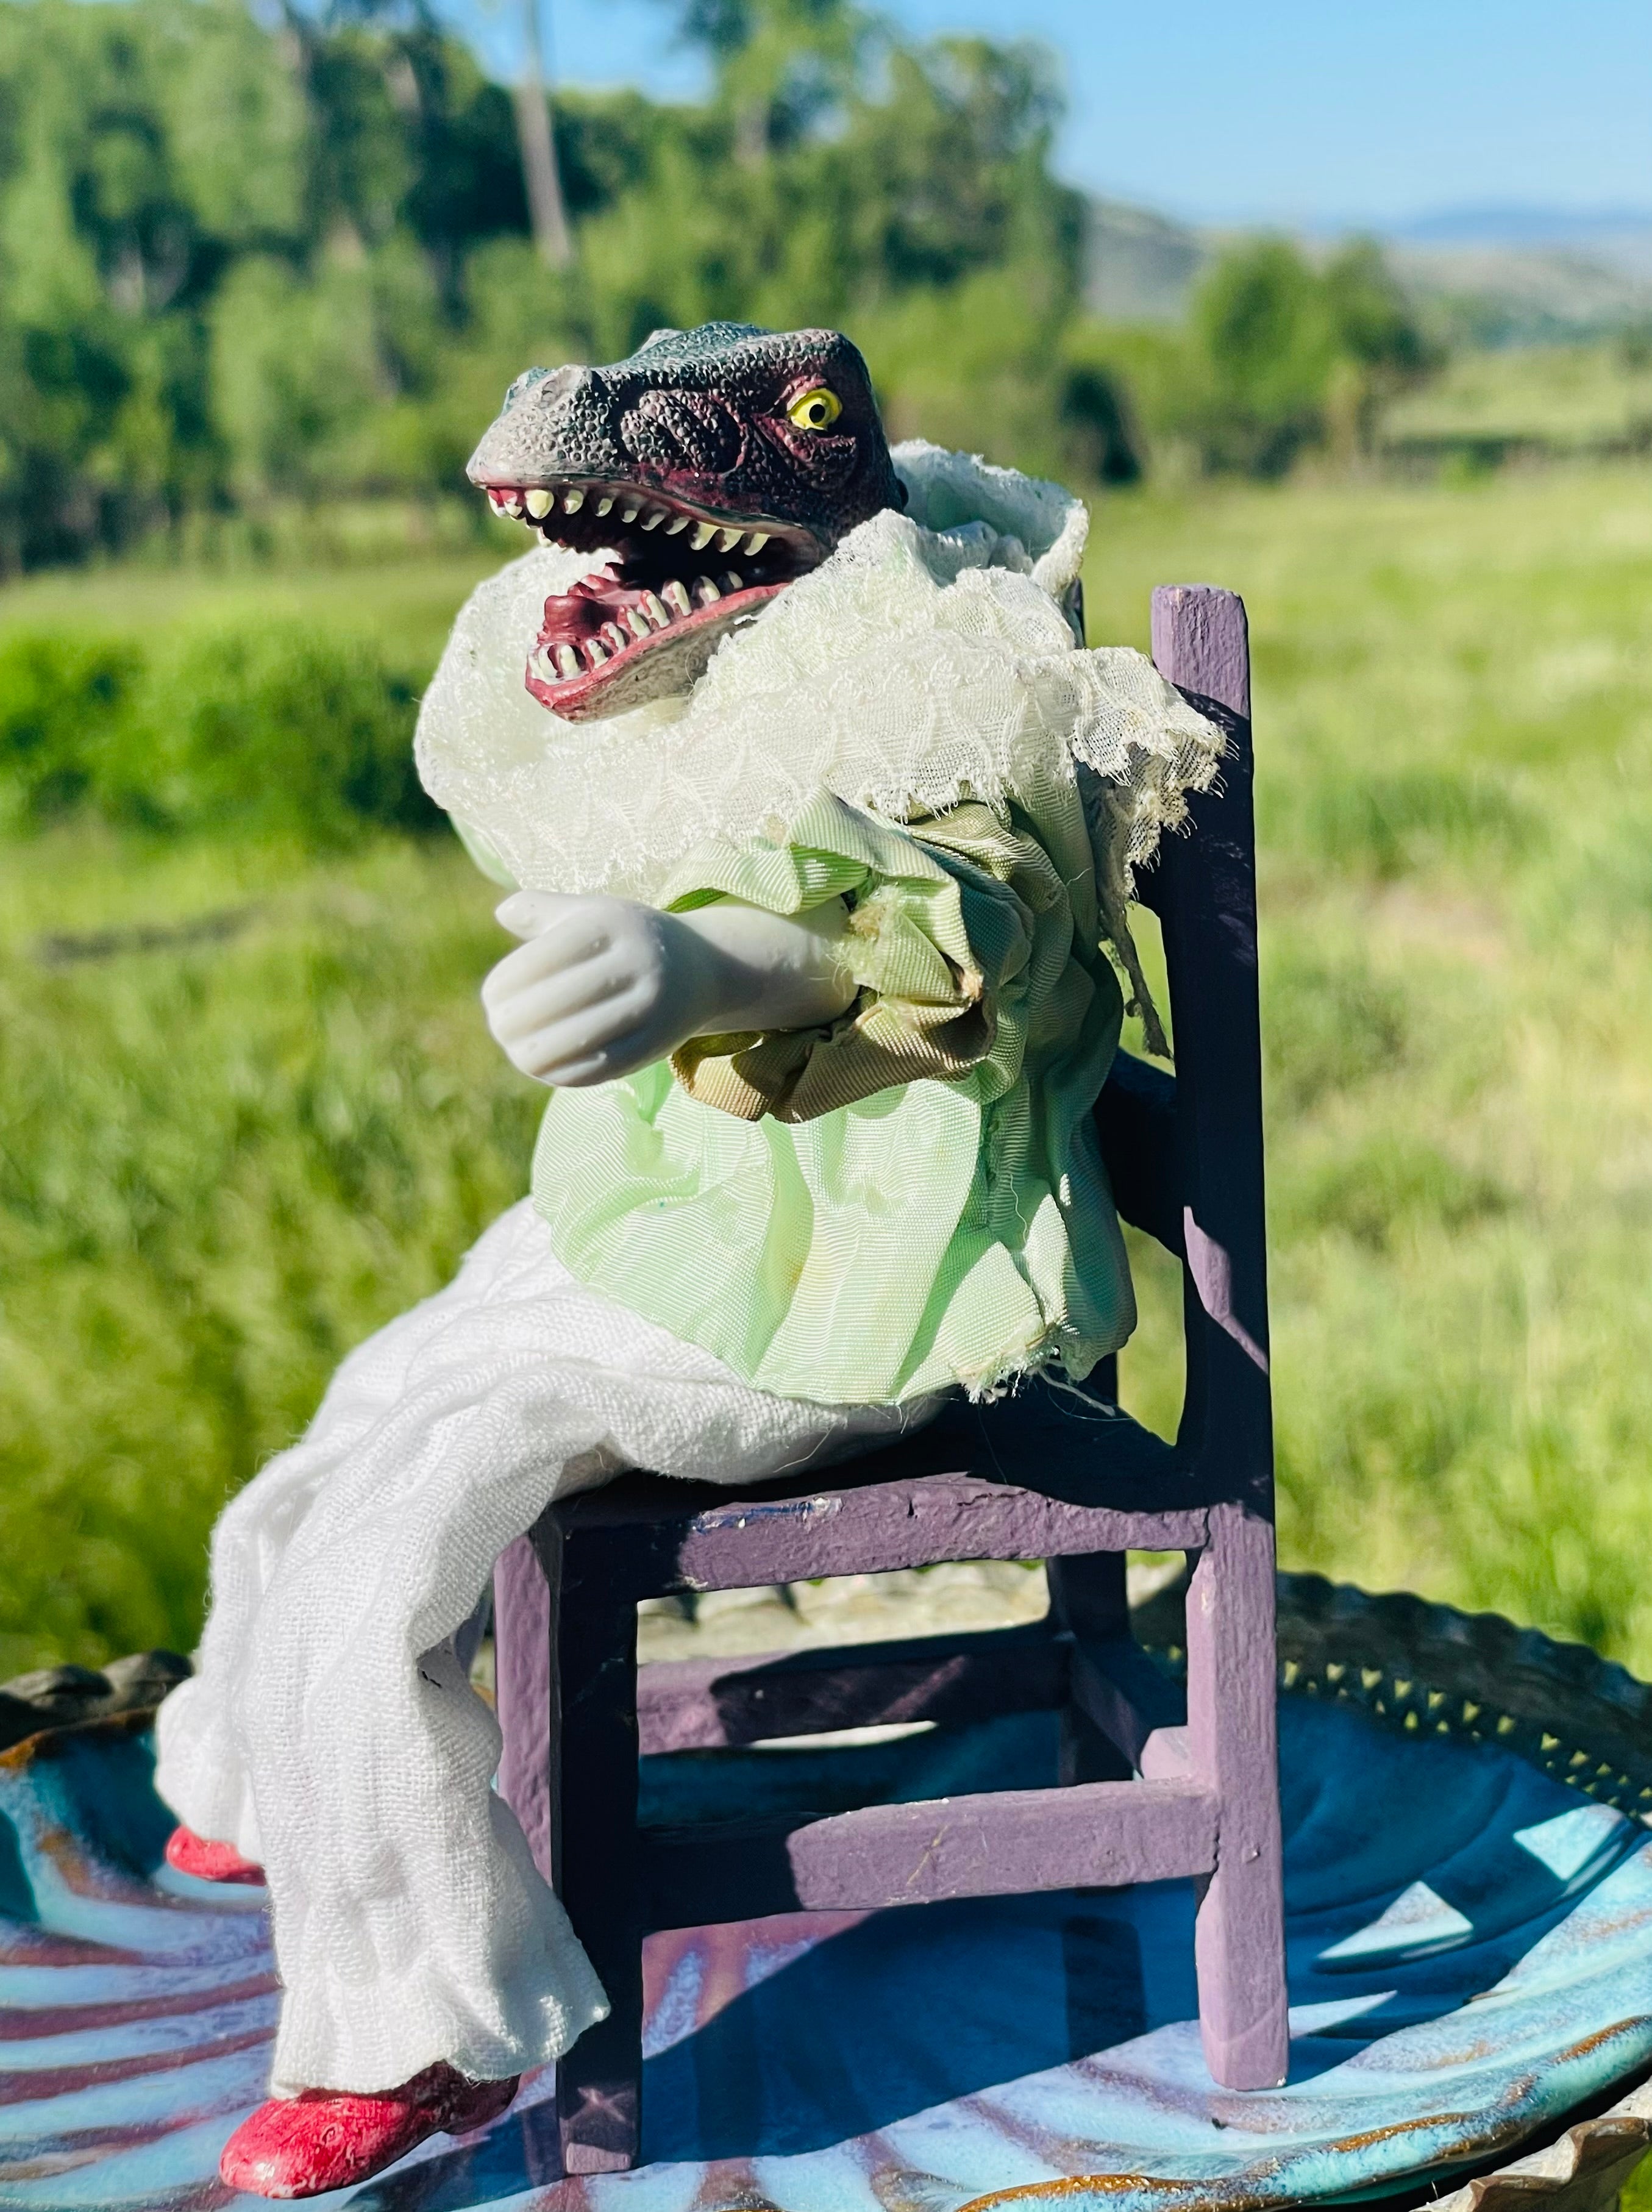 Posable doll with dinosaur head sitting on a tiny chair. 6" tall 